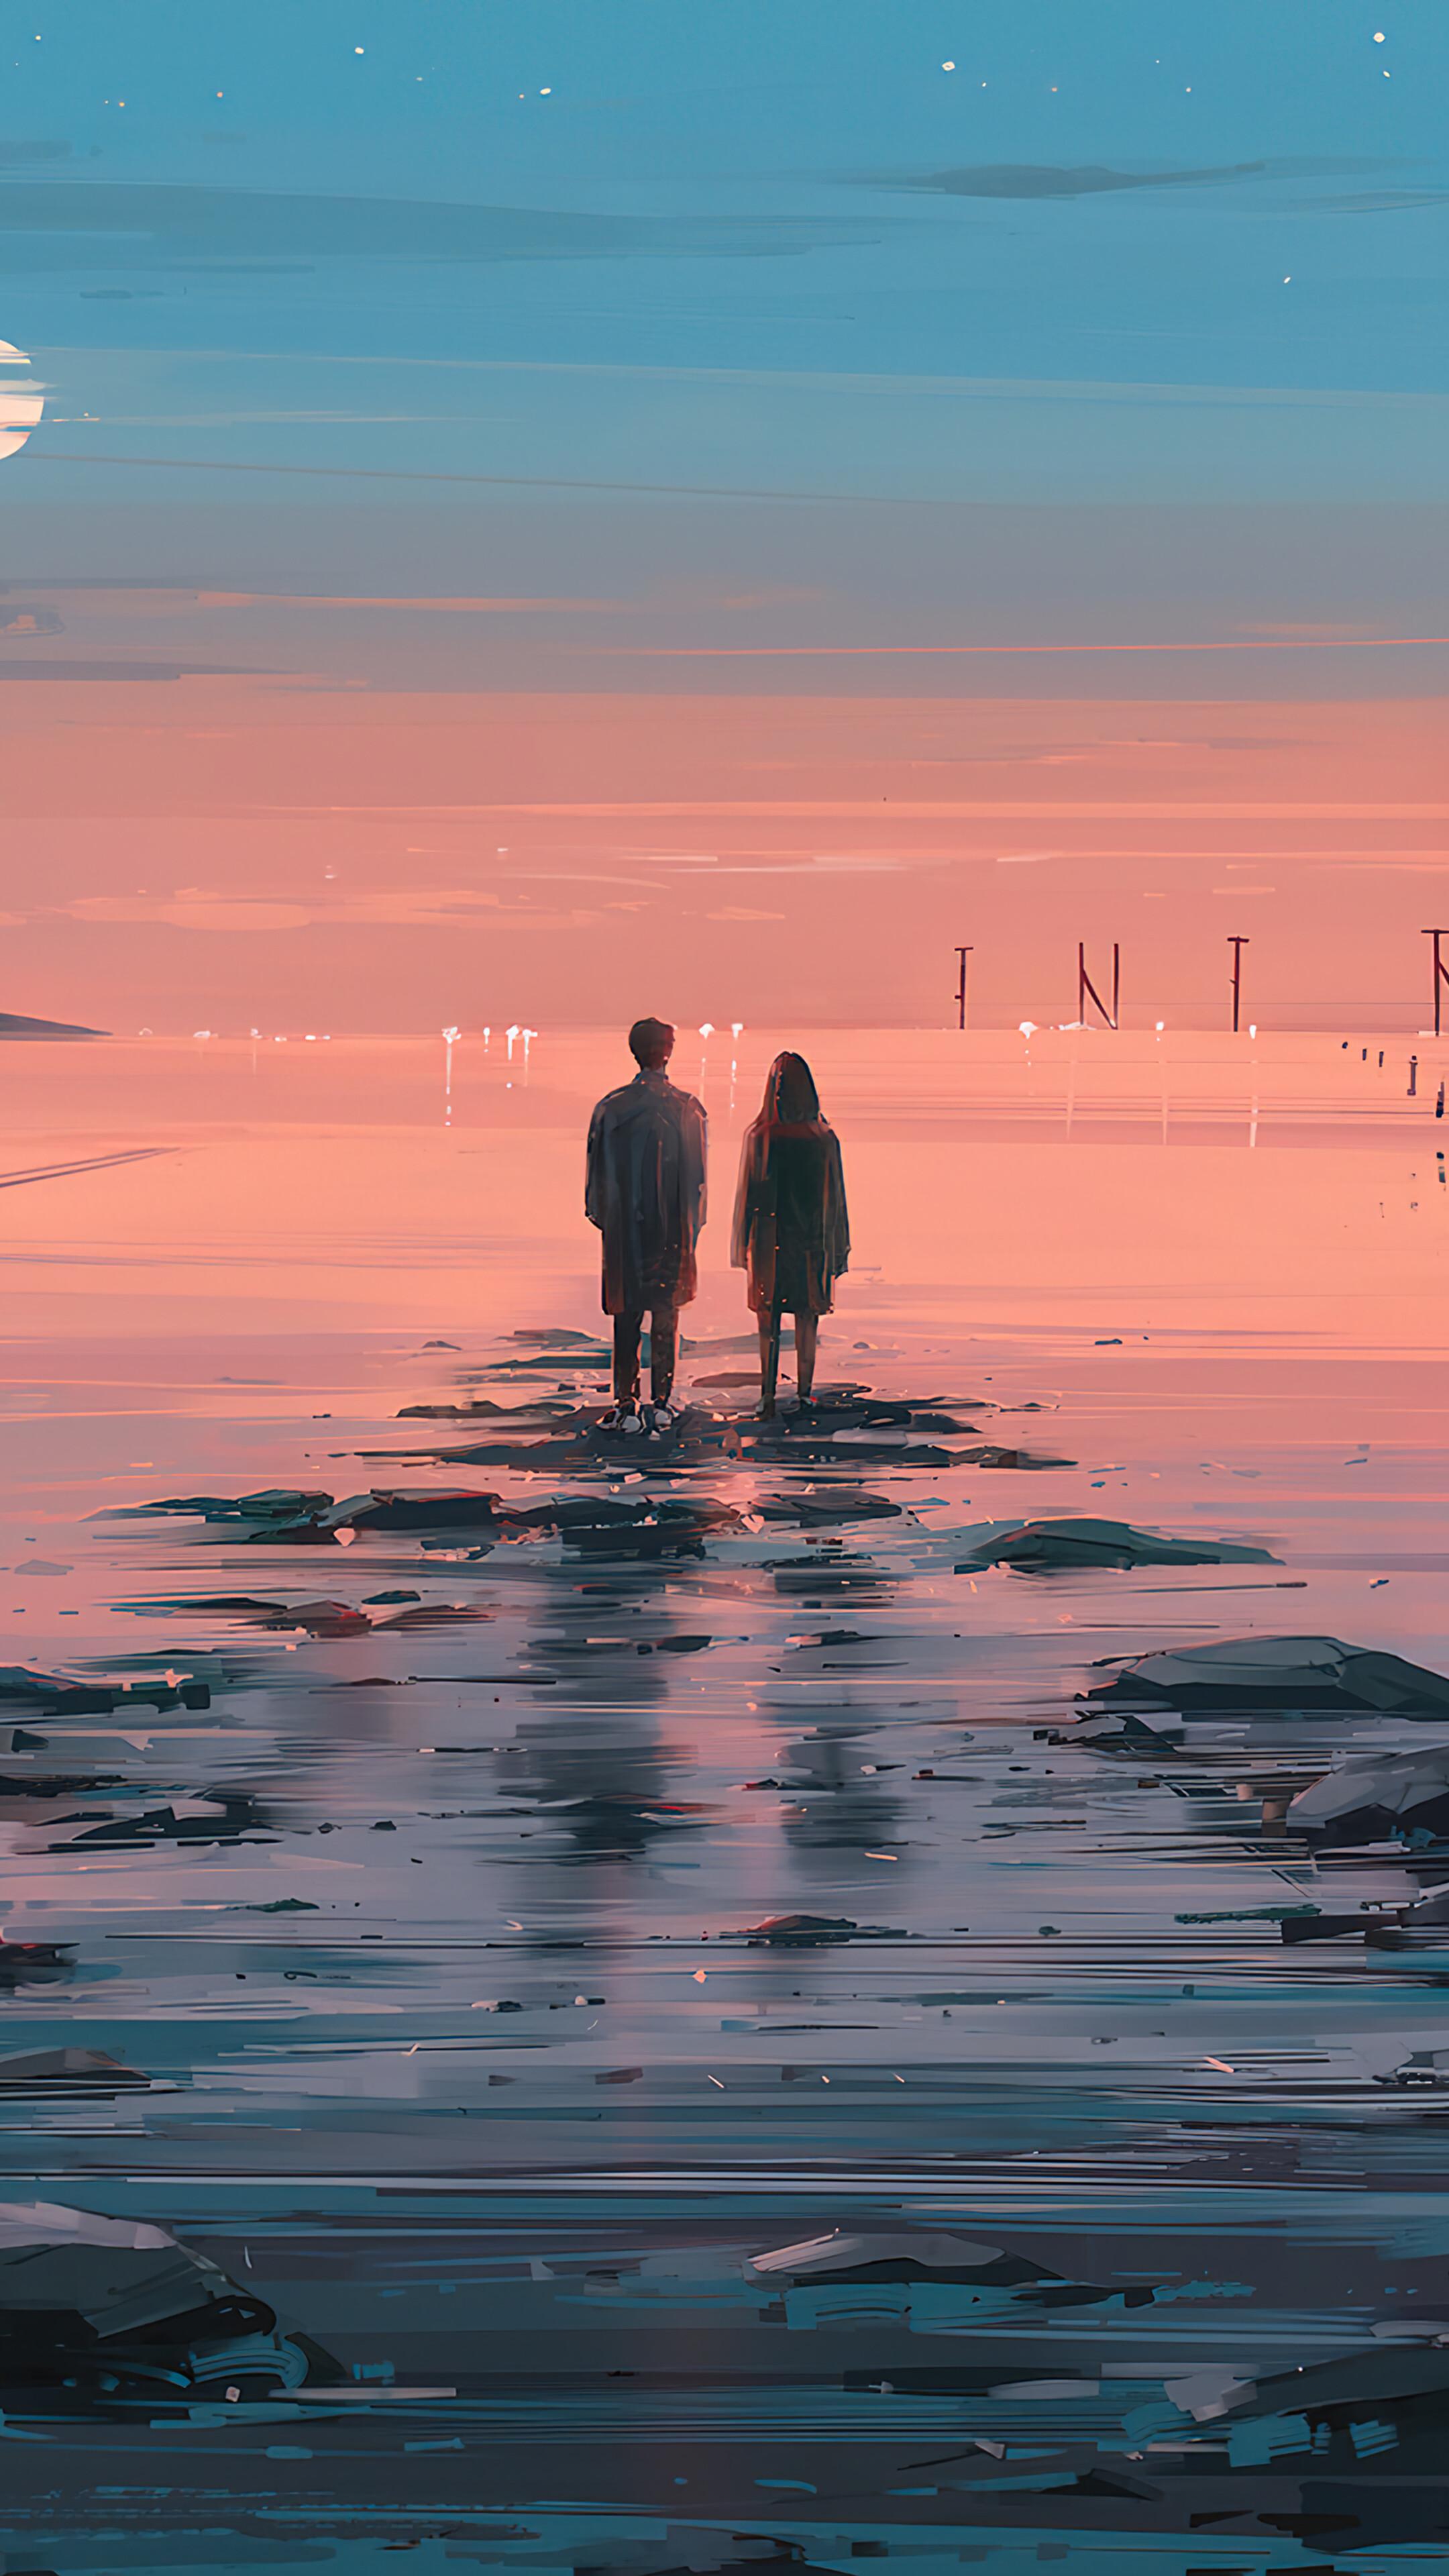 Couple Silhouette Sunset Scenery Digital Art 4k Wallpaper iPhone